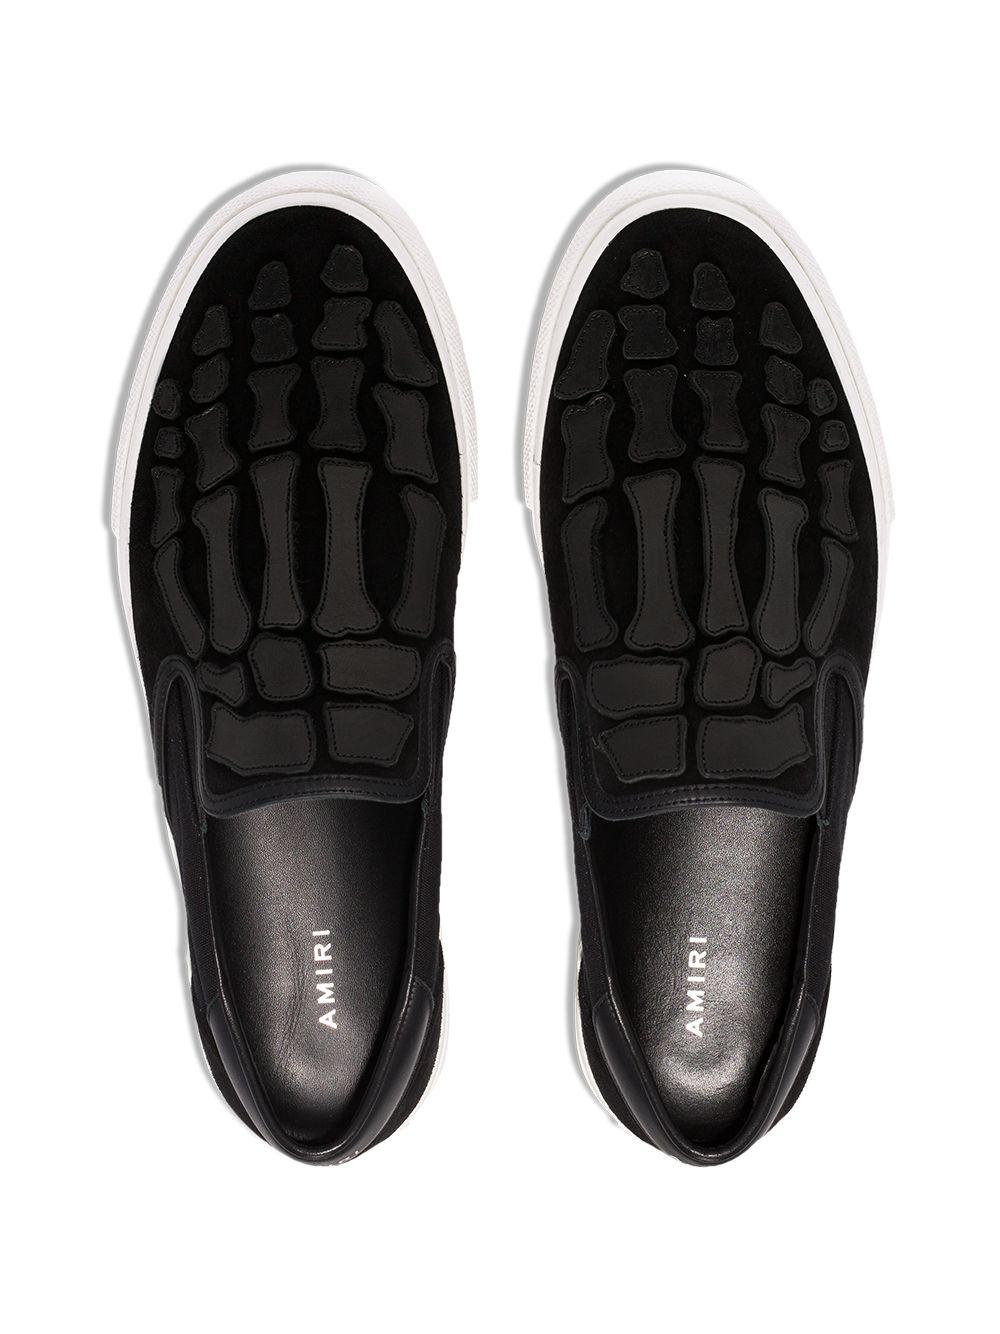 Amiri Skeleton Slip-on Sneakers in Black for Men - Lyst